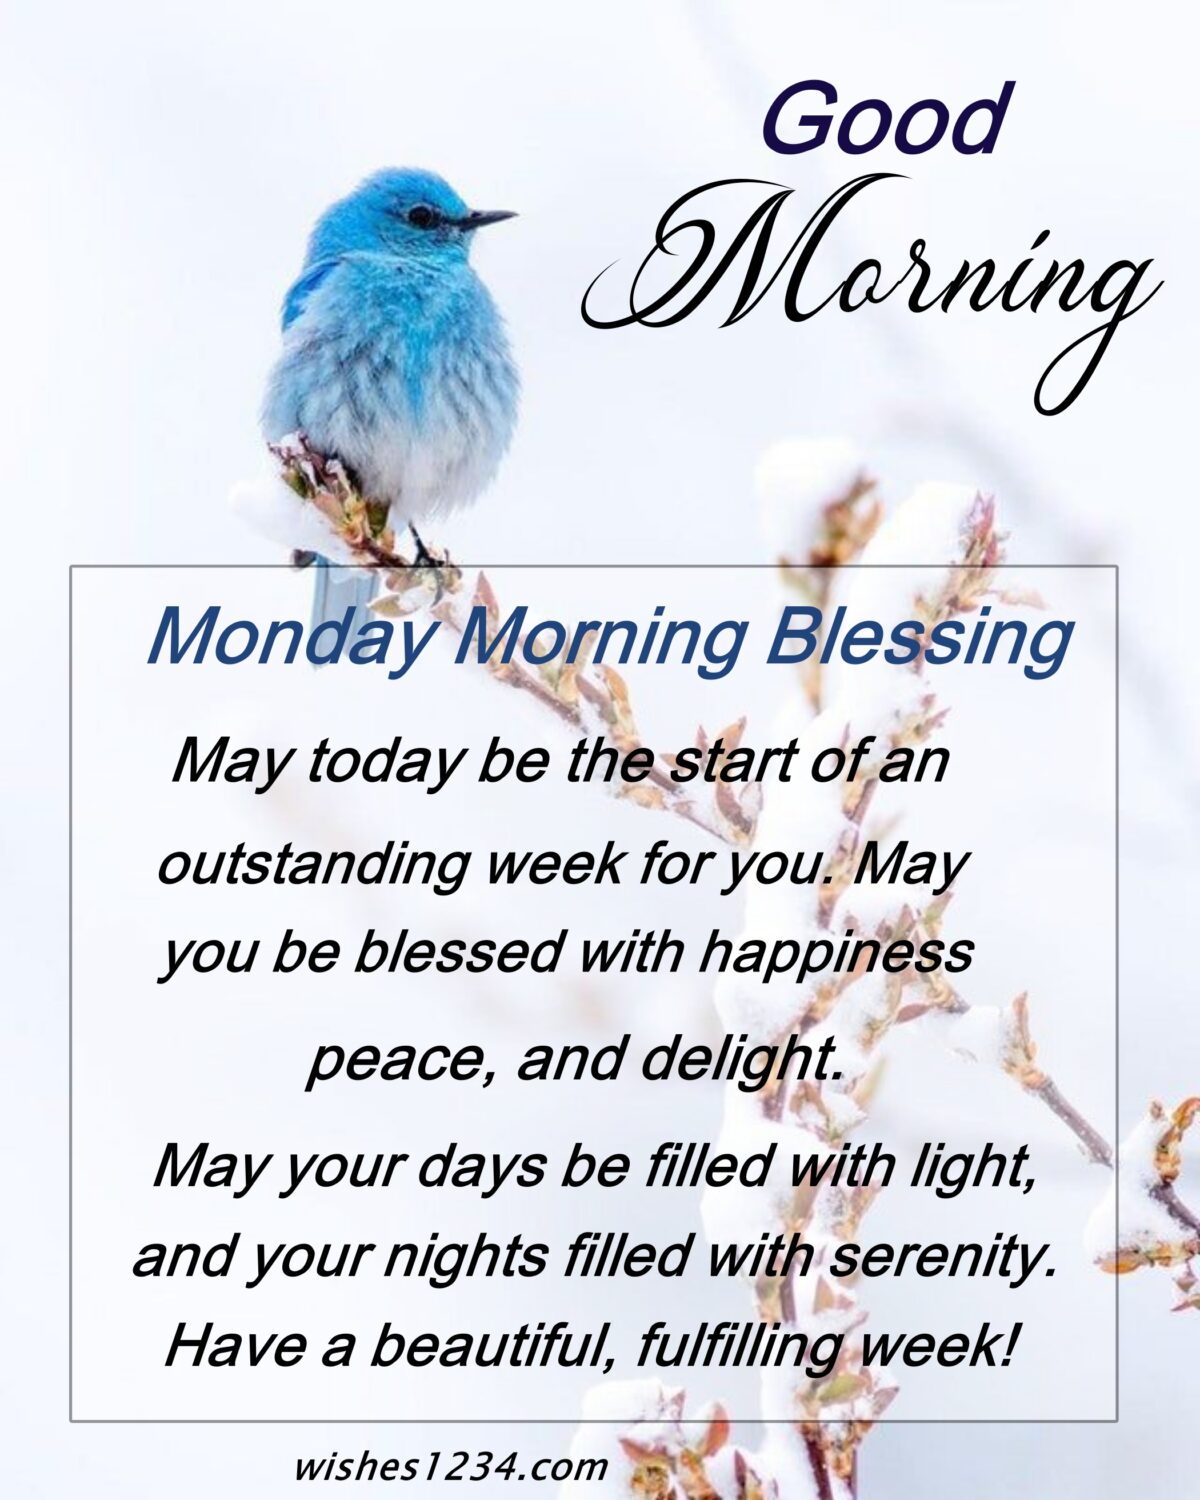 Blue bird sitting on branch 1,Good Morning Monday| Monday Wishes |Monday quotes ,Good Morning ,Good Morning Monday| Monday Wishes |Monday quotes